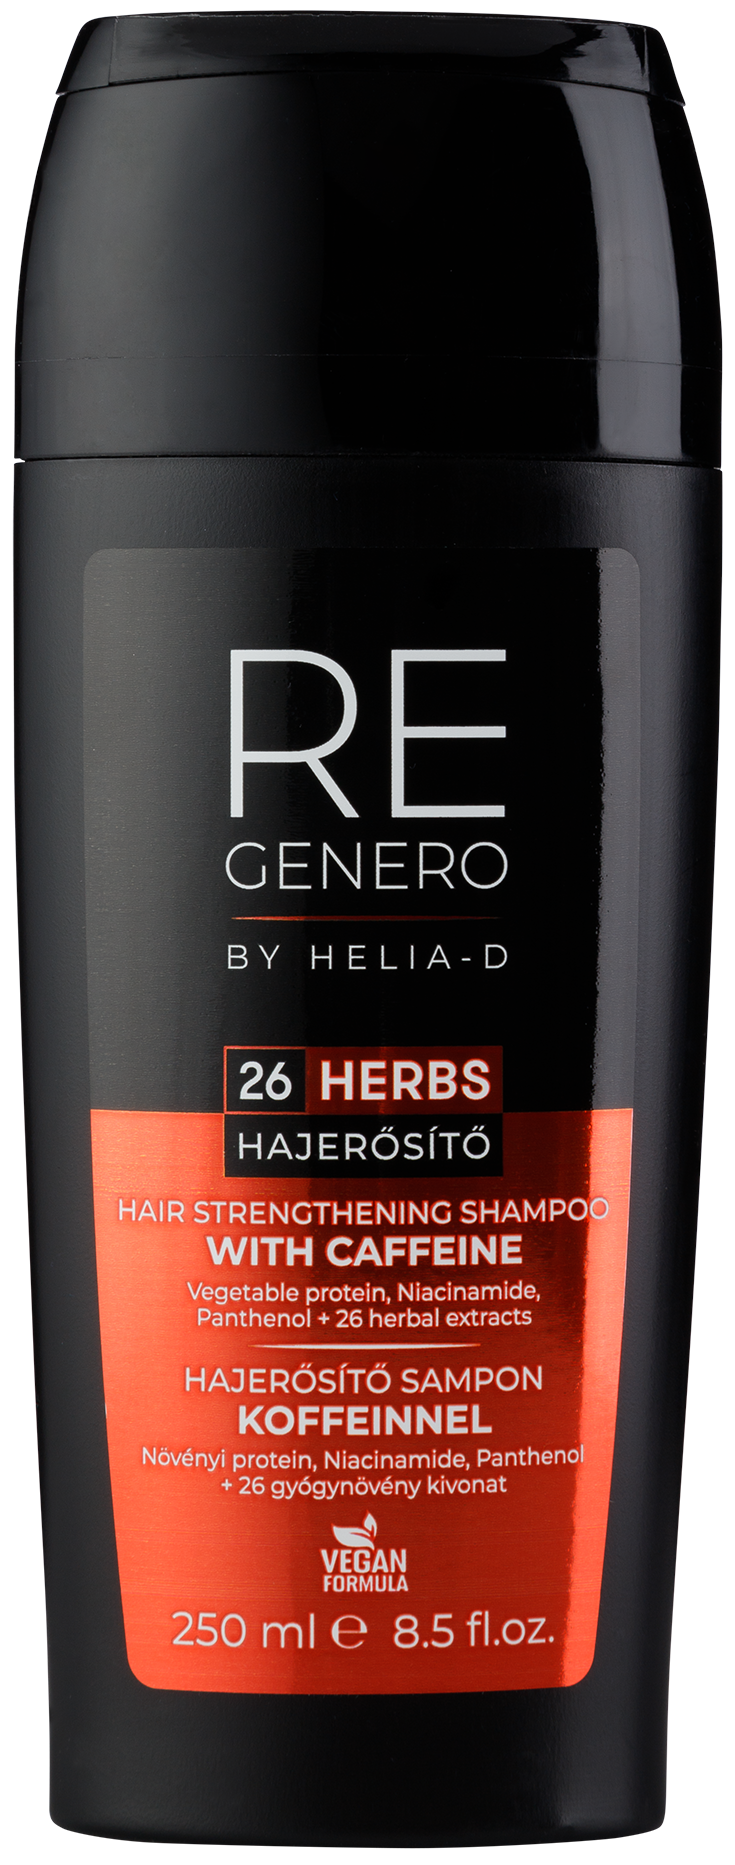 Helia-D Regenero Hair Strenghtening Shampoo With Caffeine, 250 ml